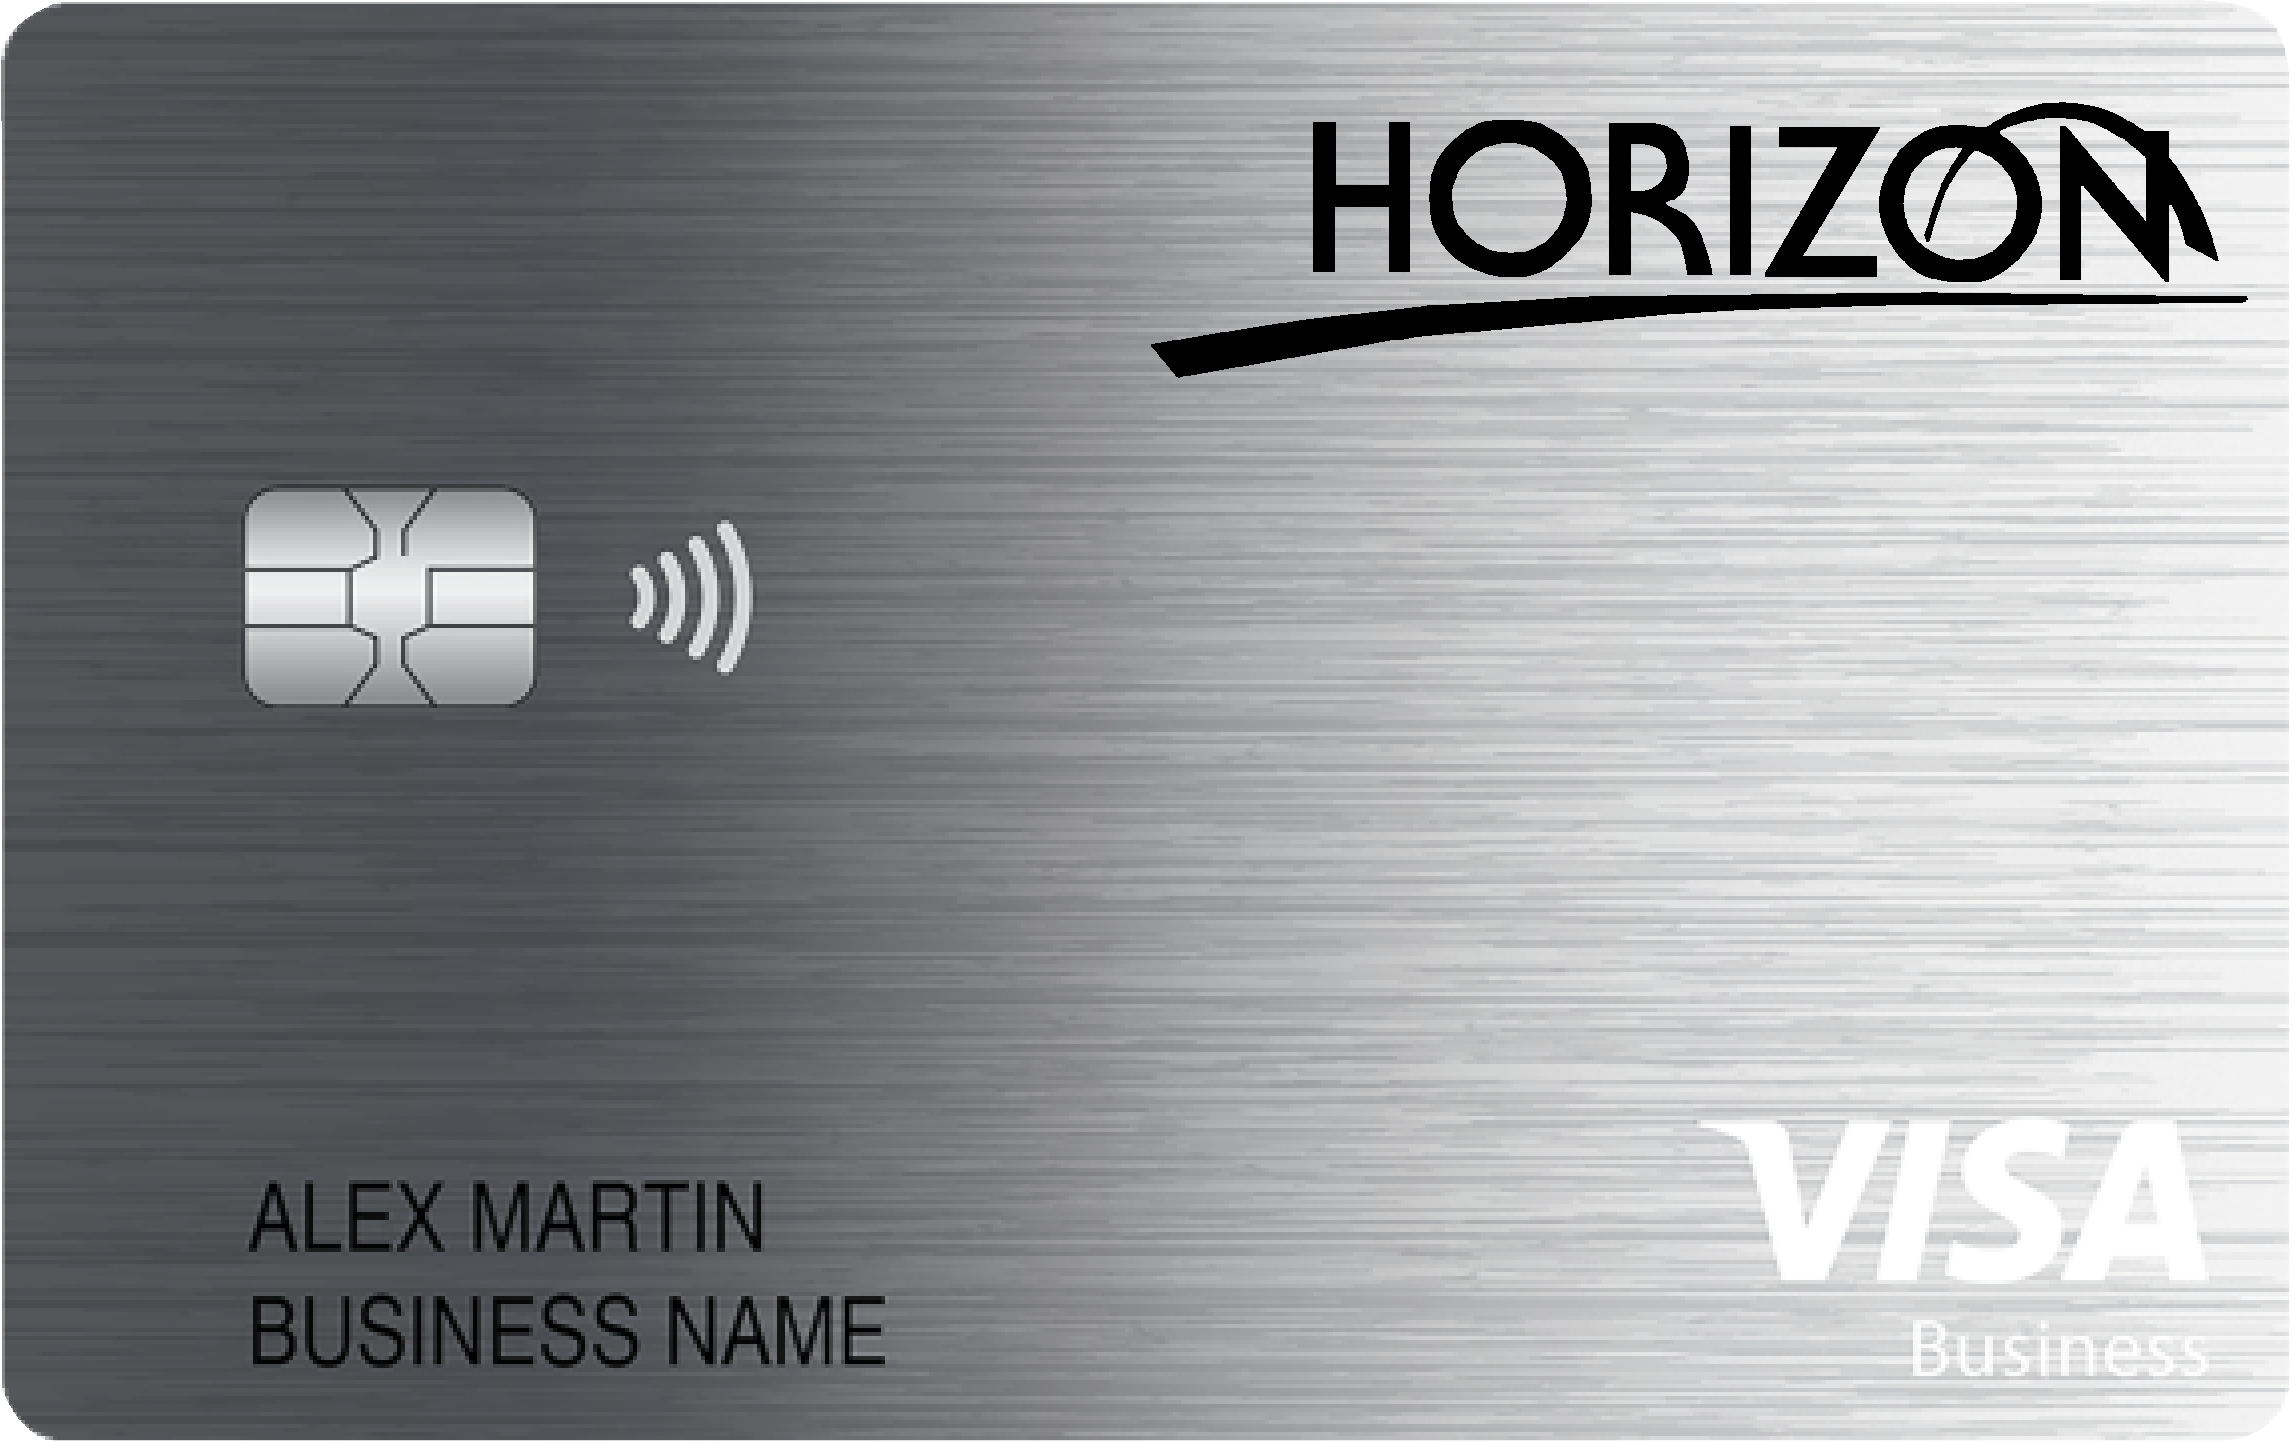 A horizon visa card